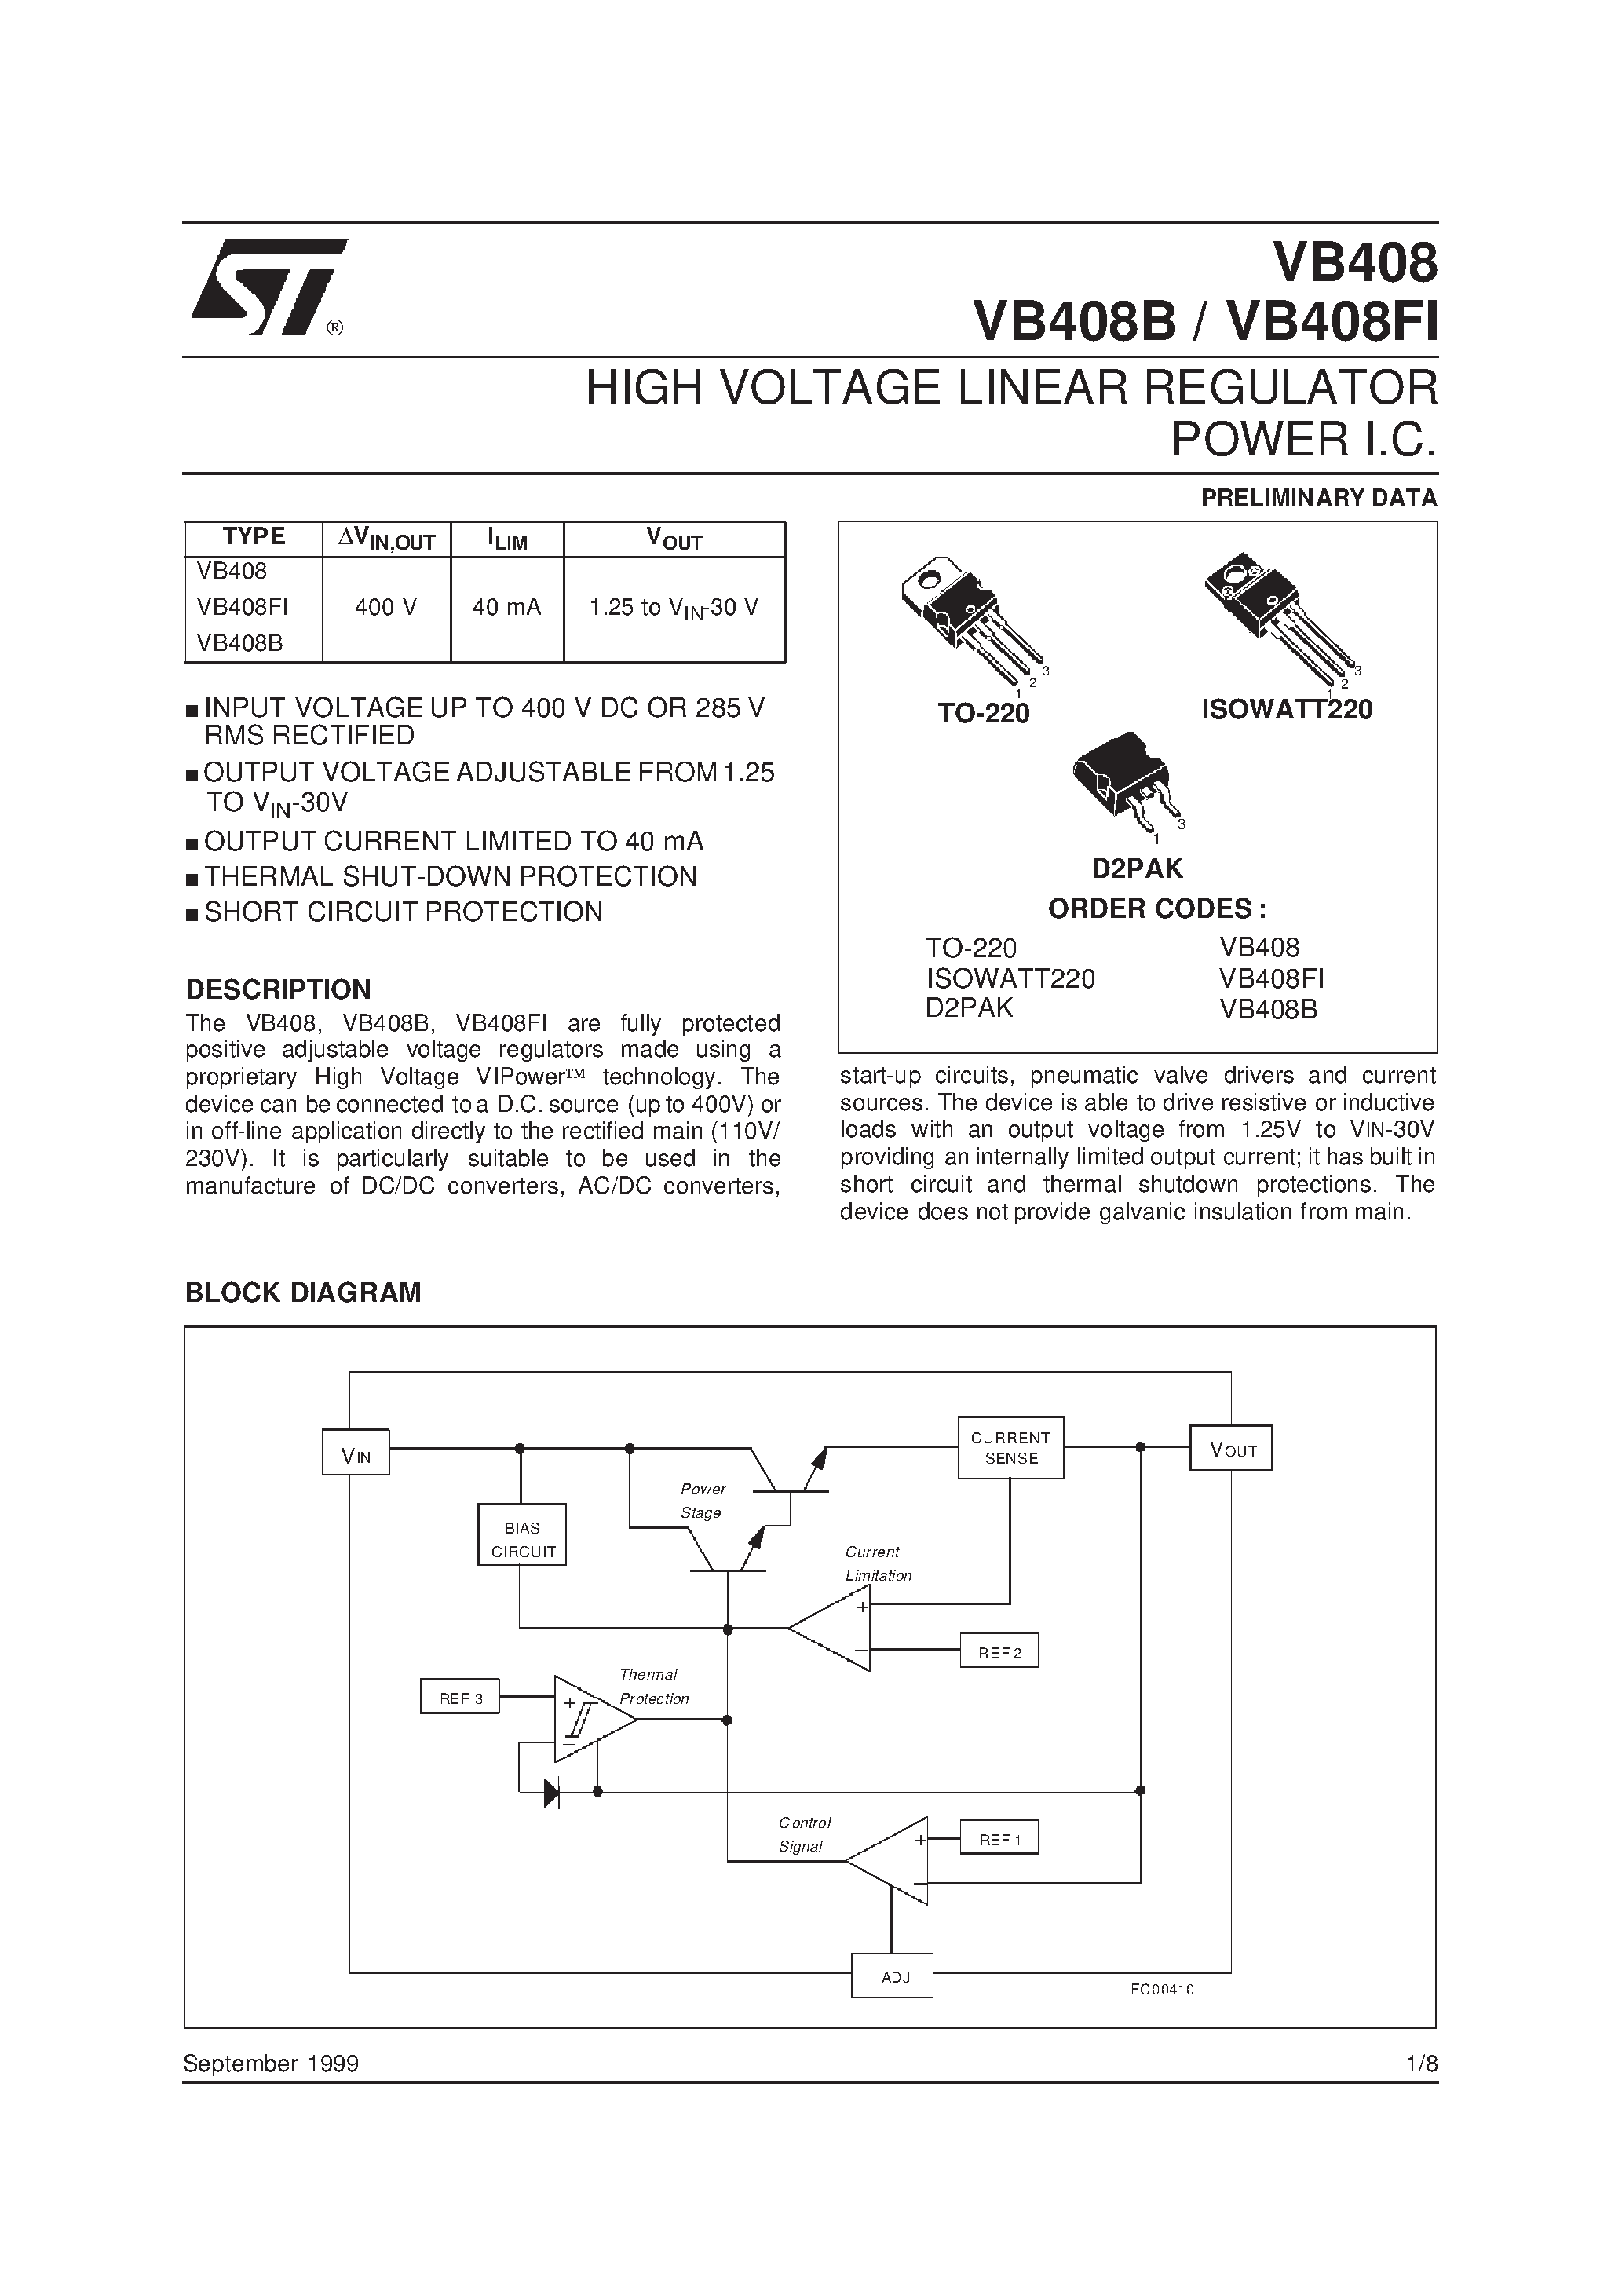 Datasheet VB408B - HIGH VOLTAGE LINEAR REGULATOR POWER I.C. page 1